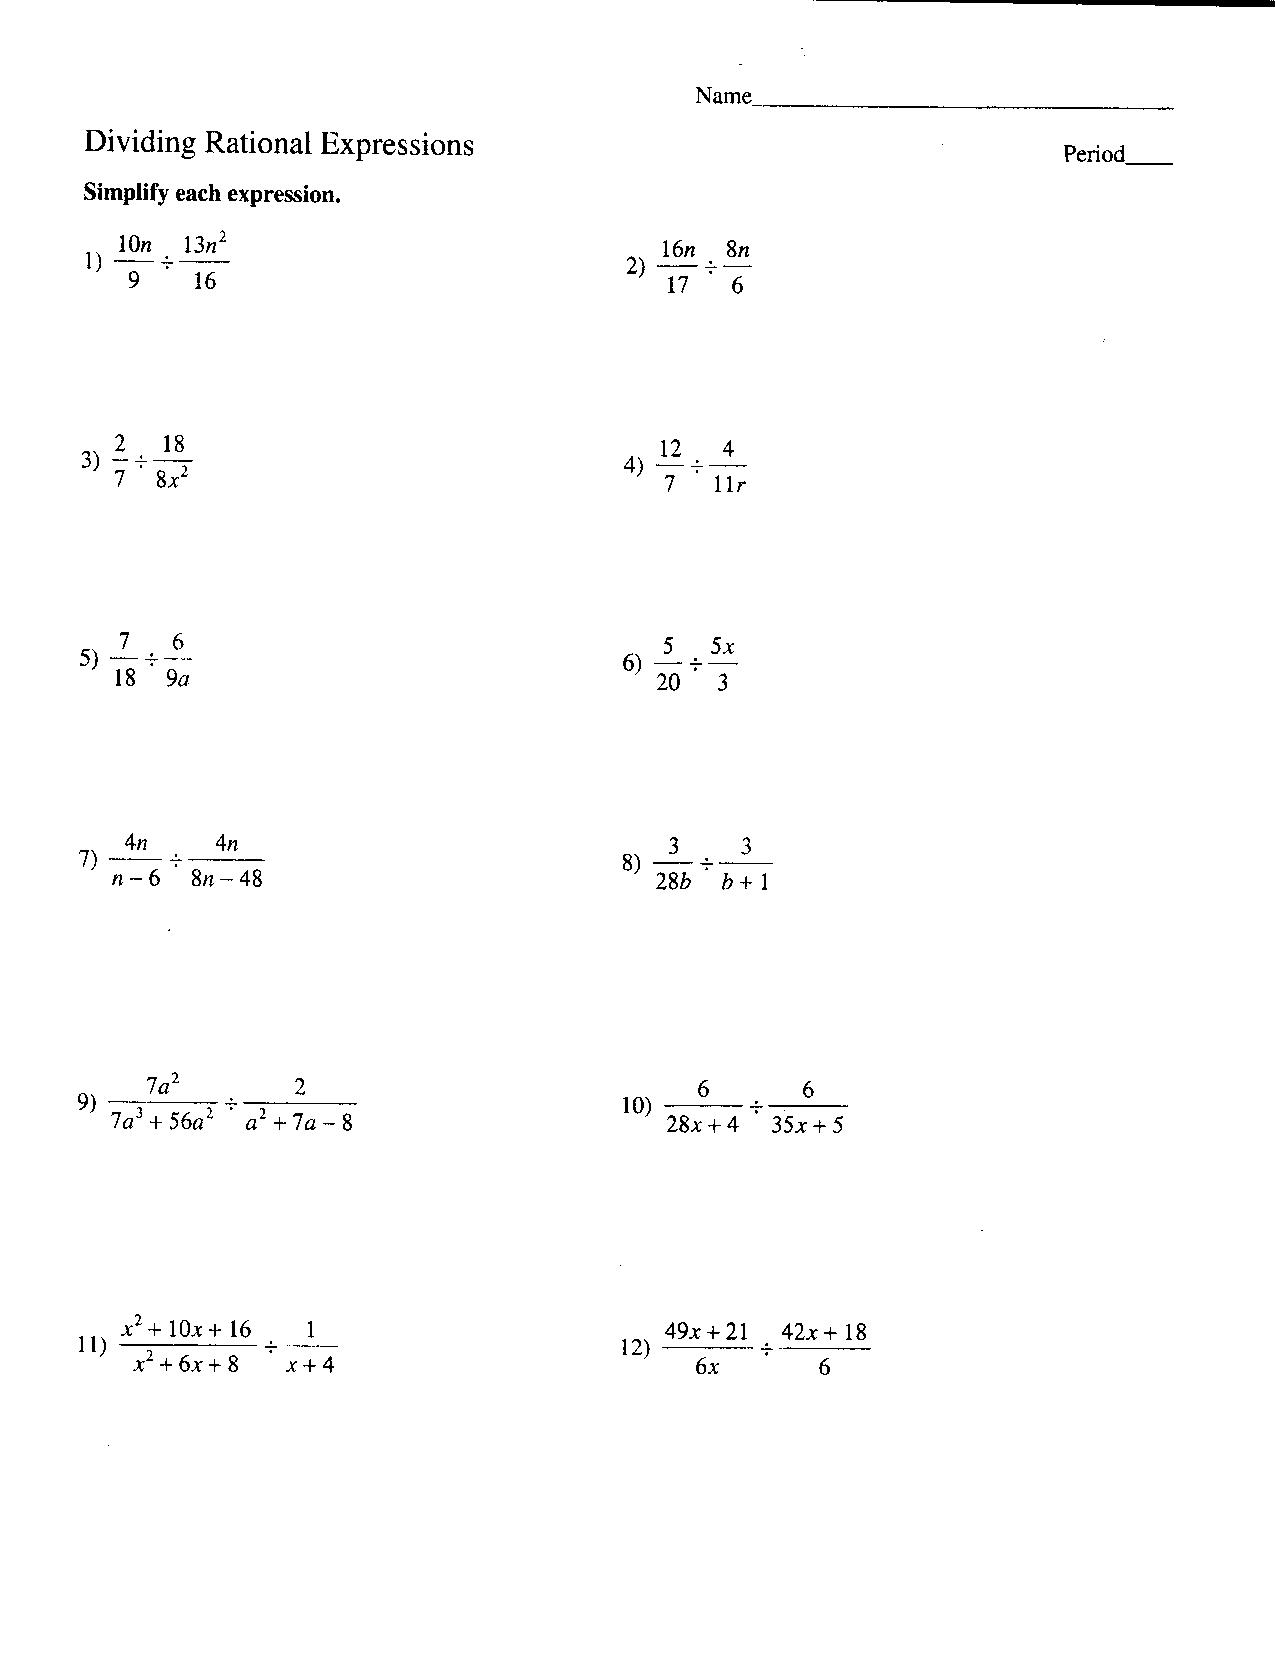 matching-questions-algebraic-expression-grade-7-pdf-math-question